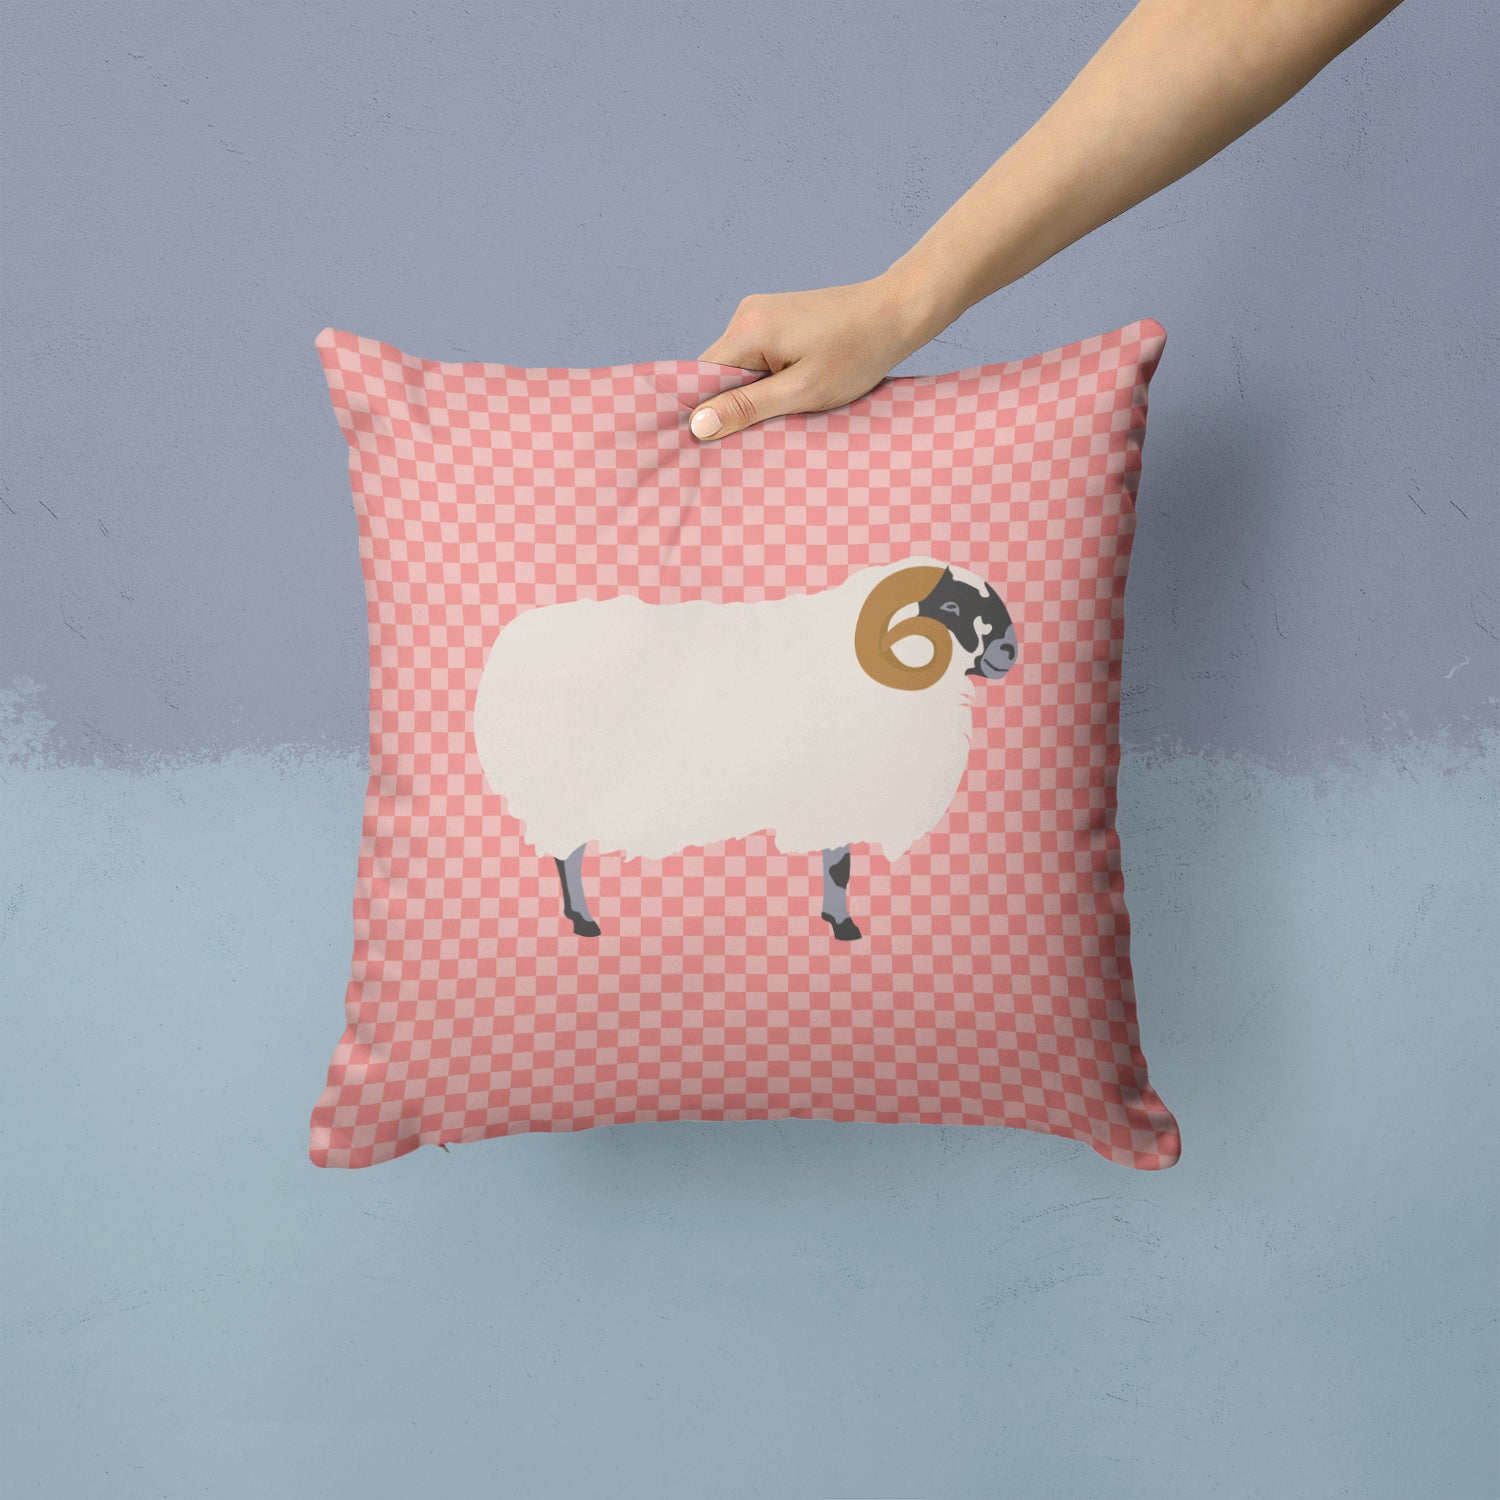 Scottish Blackface Sheep Pink Check Fabric Decorative Pillow BB7973PW1414 - the-store.com